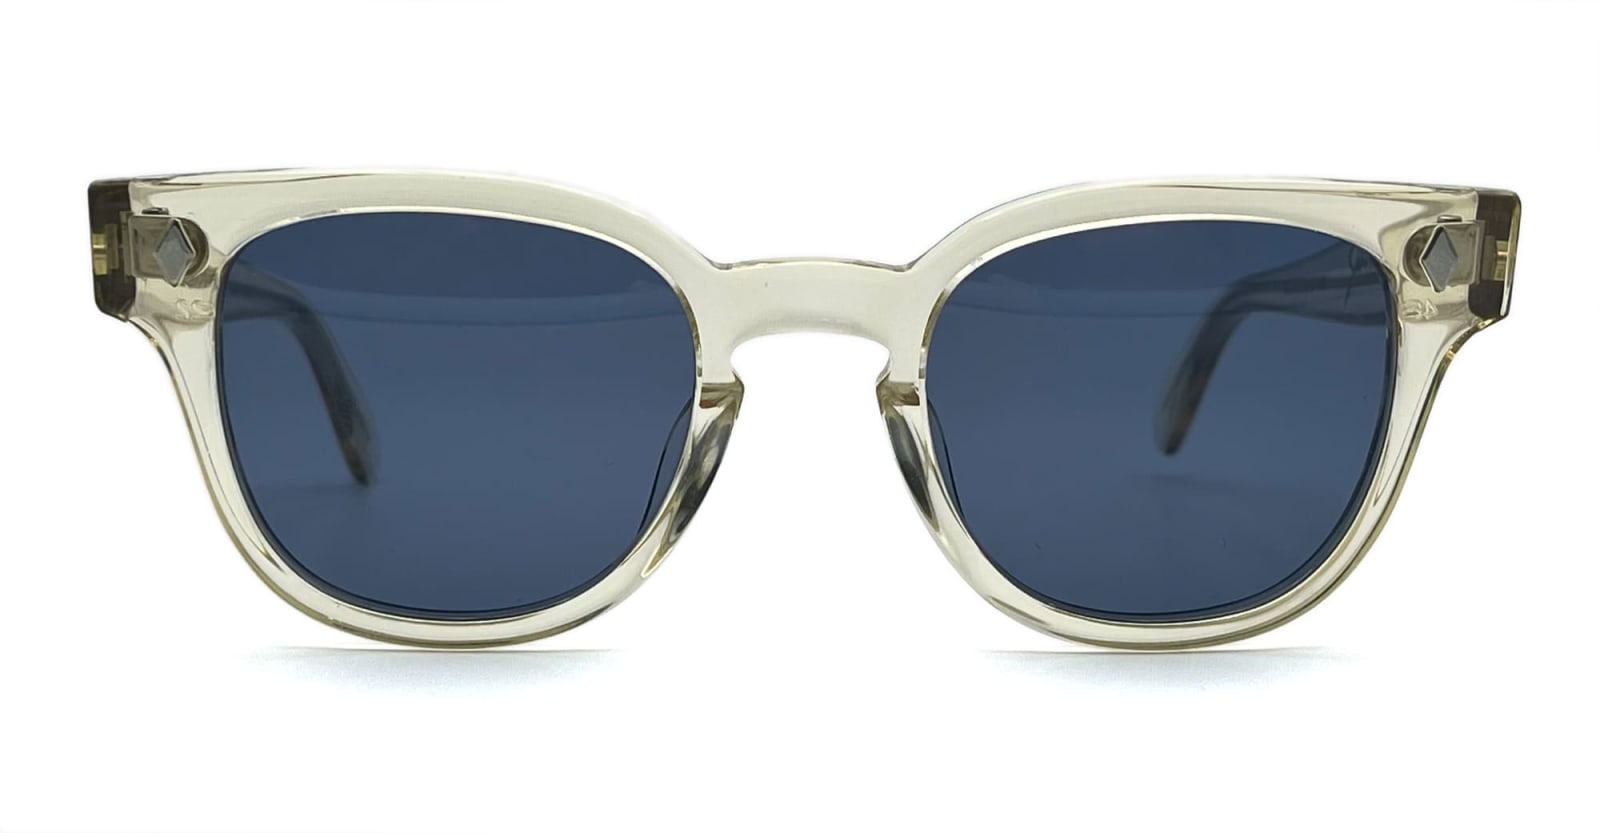 Julius Tart Optical Bryan 46x22 - Champagne / Blue Lens Sunglasses